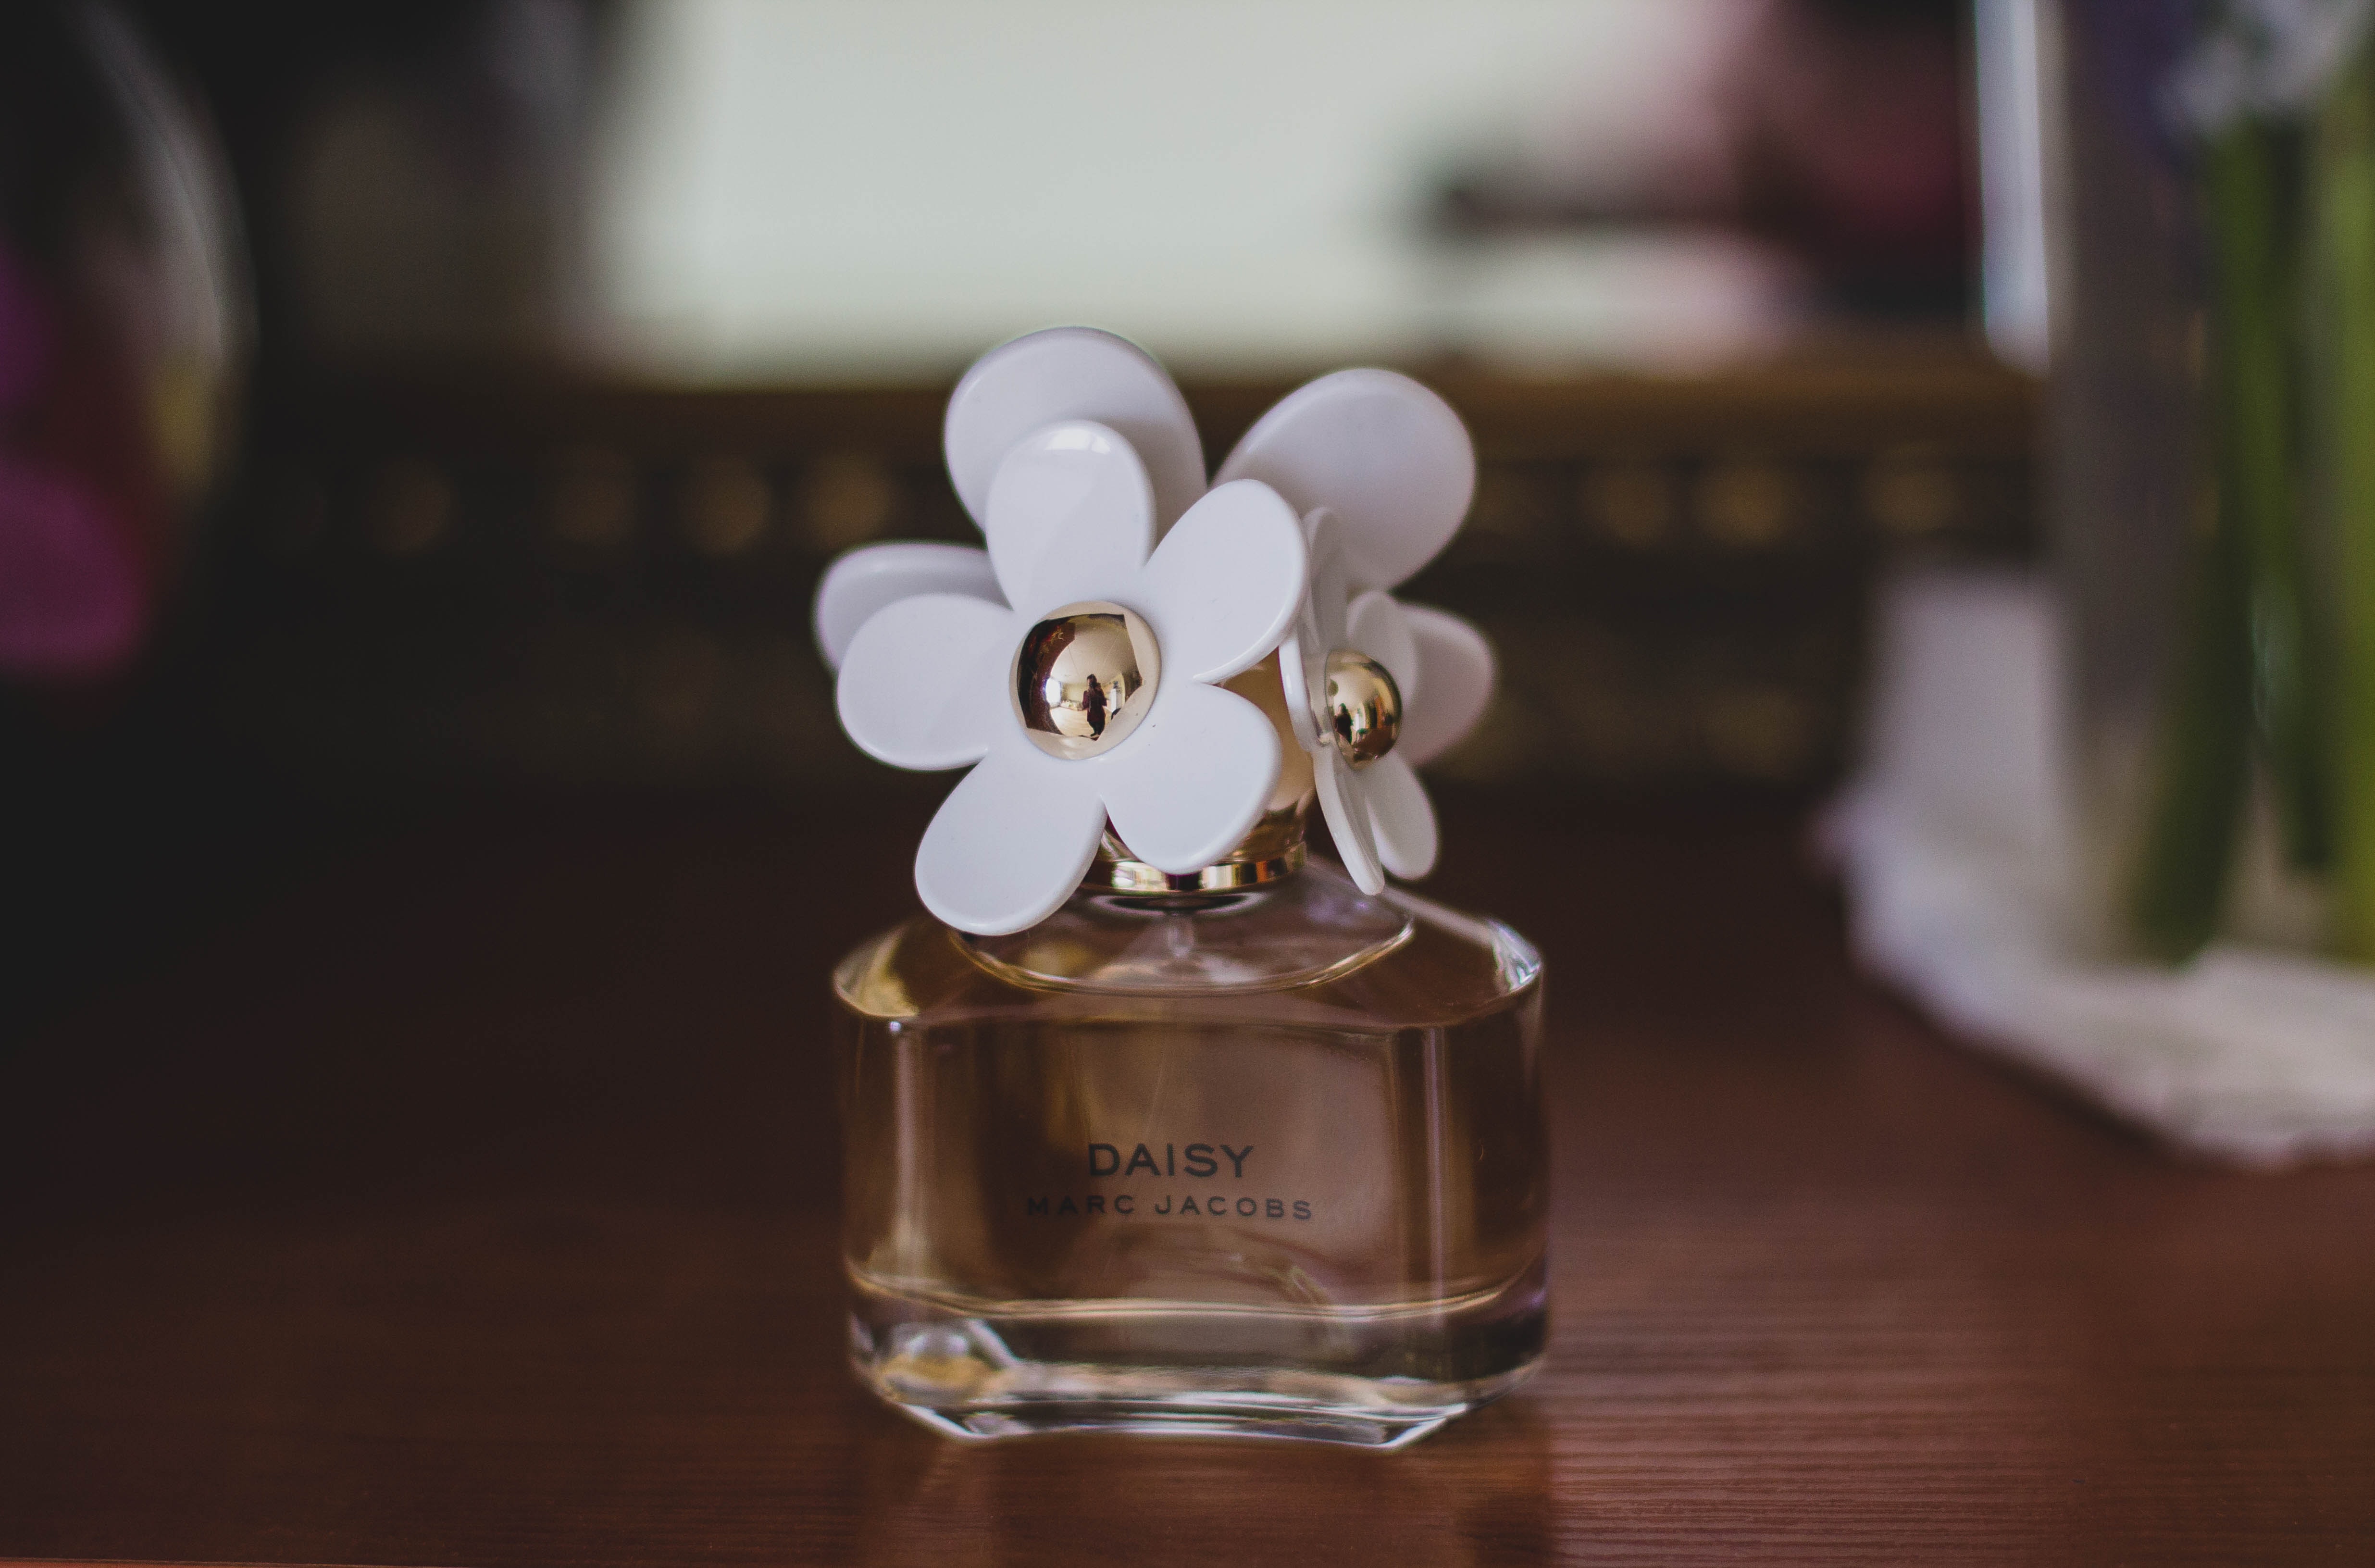 Marc Jacobs Daisy Fragrance Bottle, Blur, Blurred background, Bottle, Close-up, HQ Photo